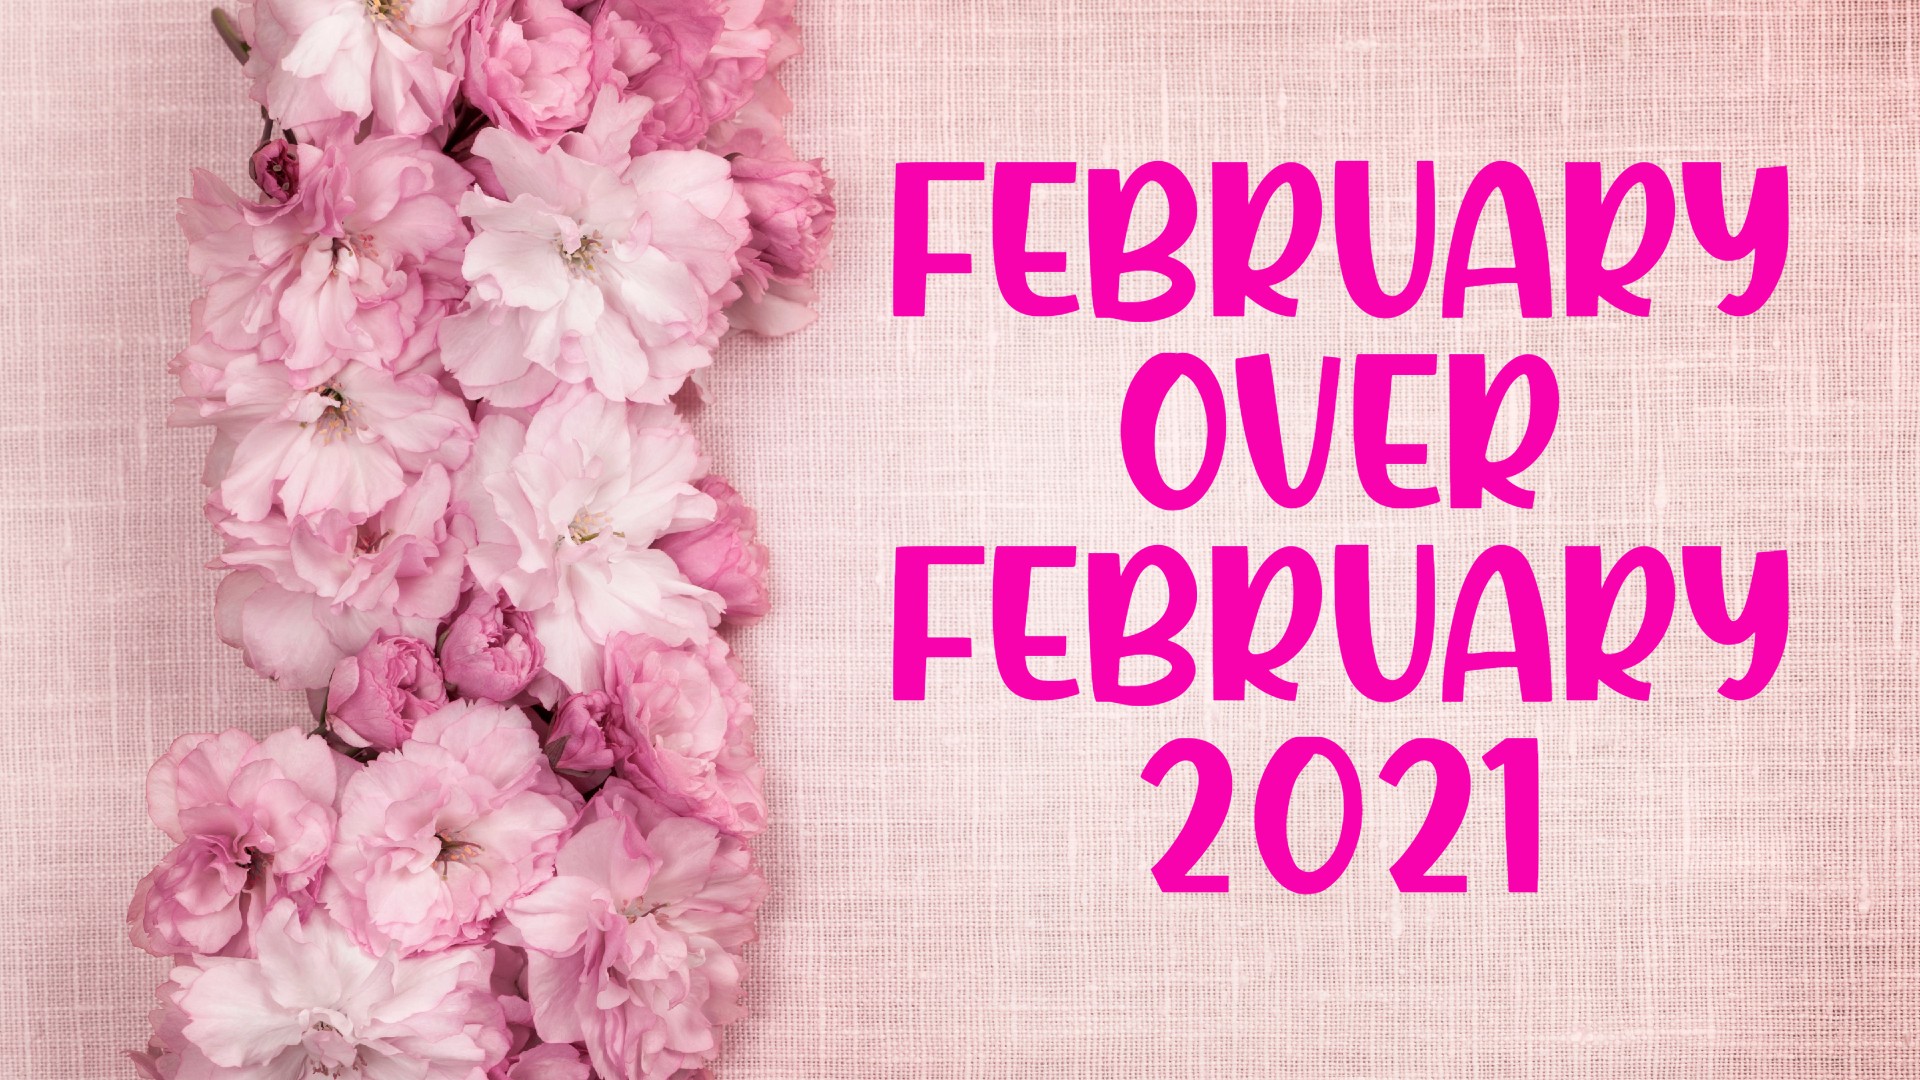 February over February update 2021